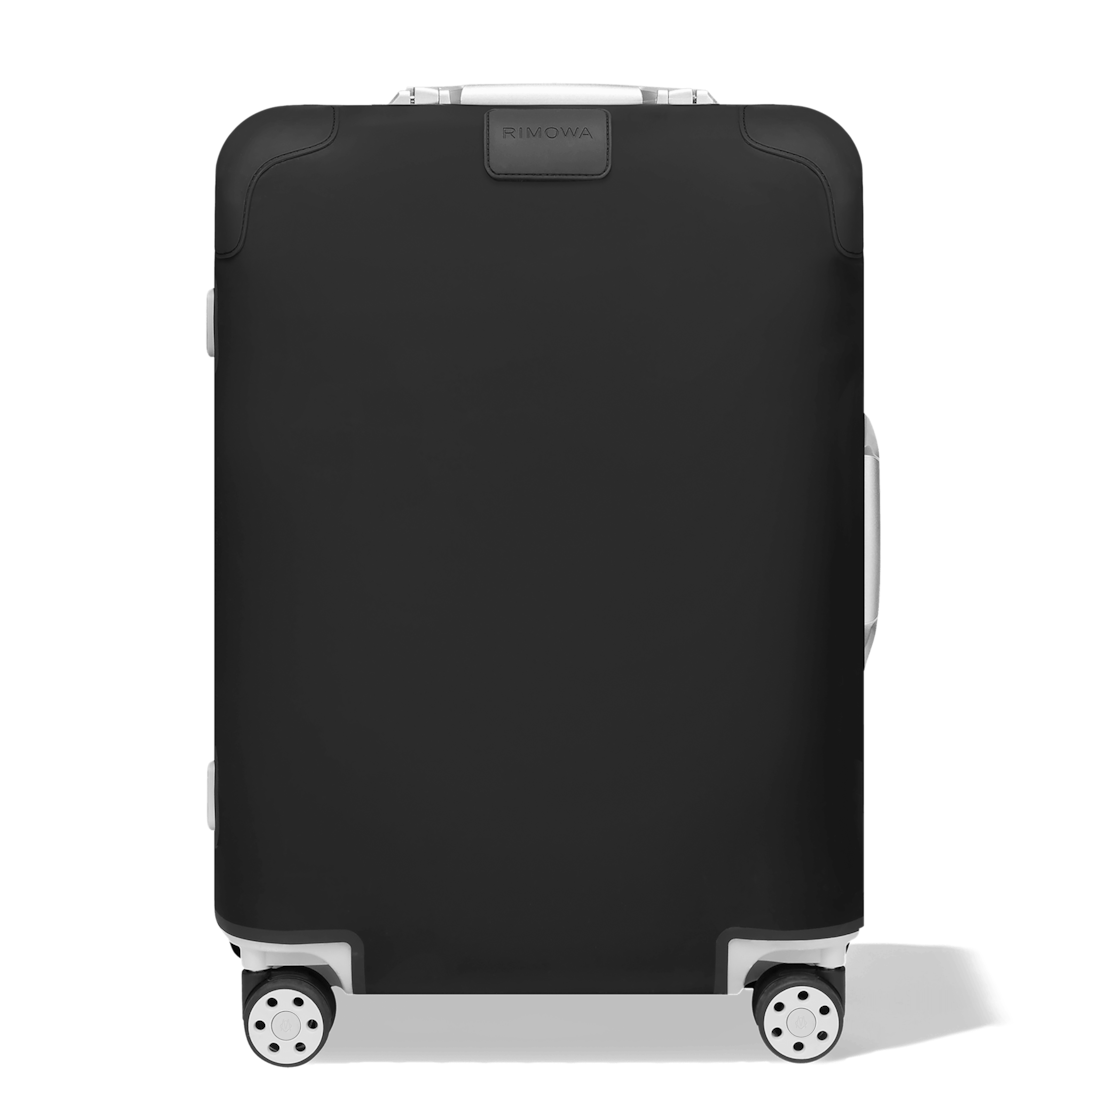 rimowa suitcase cover